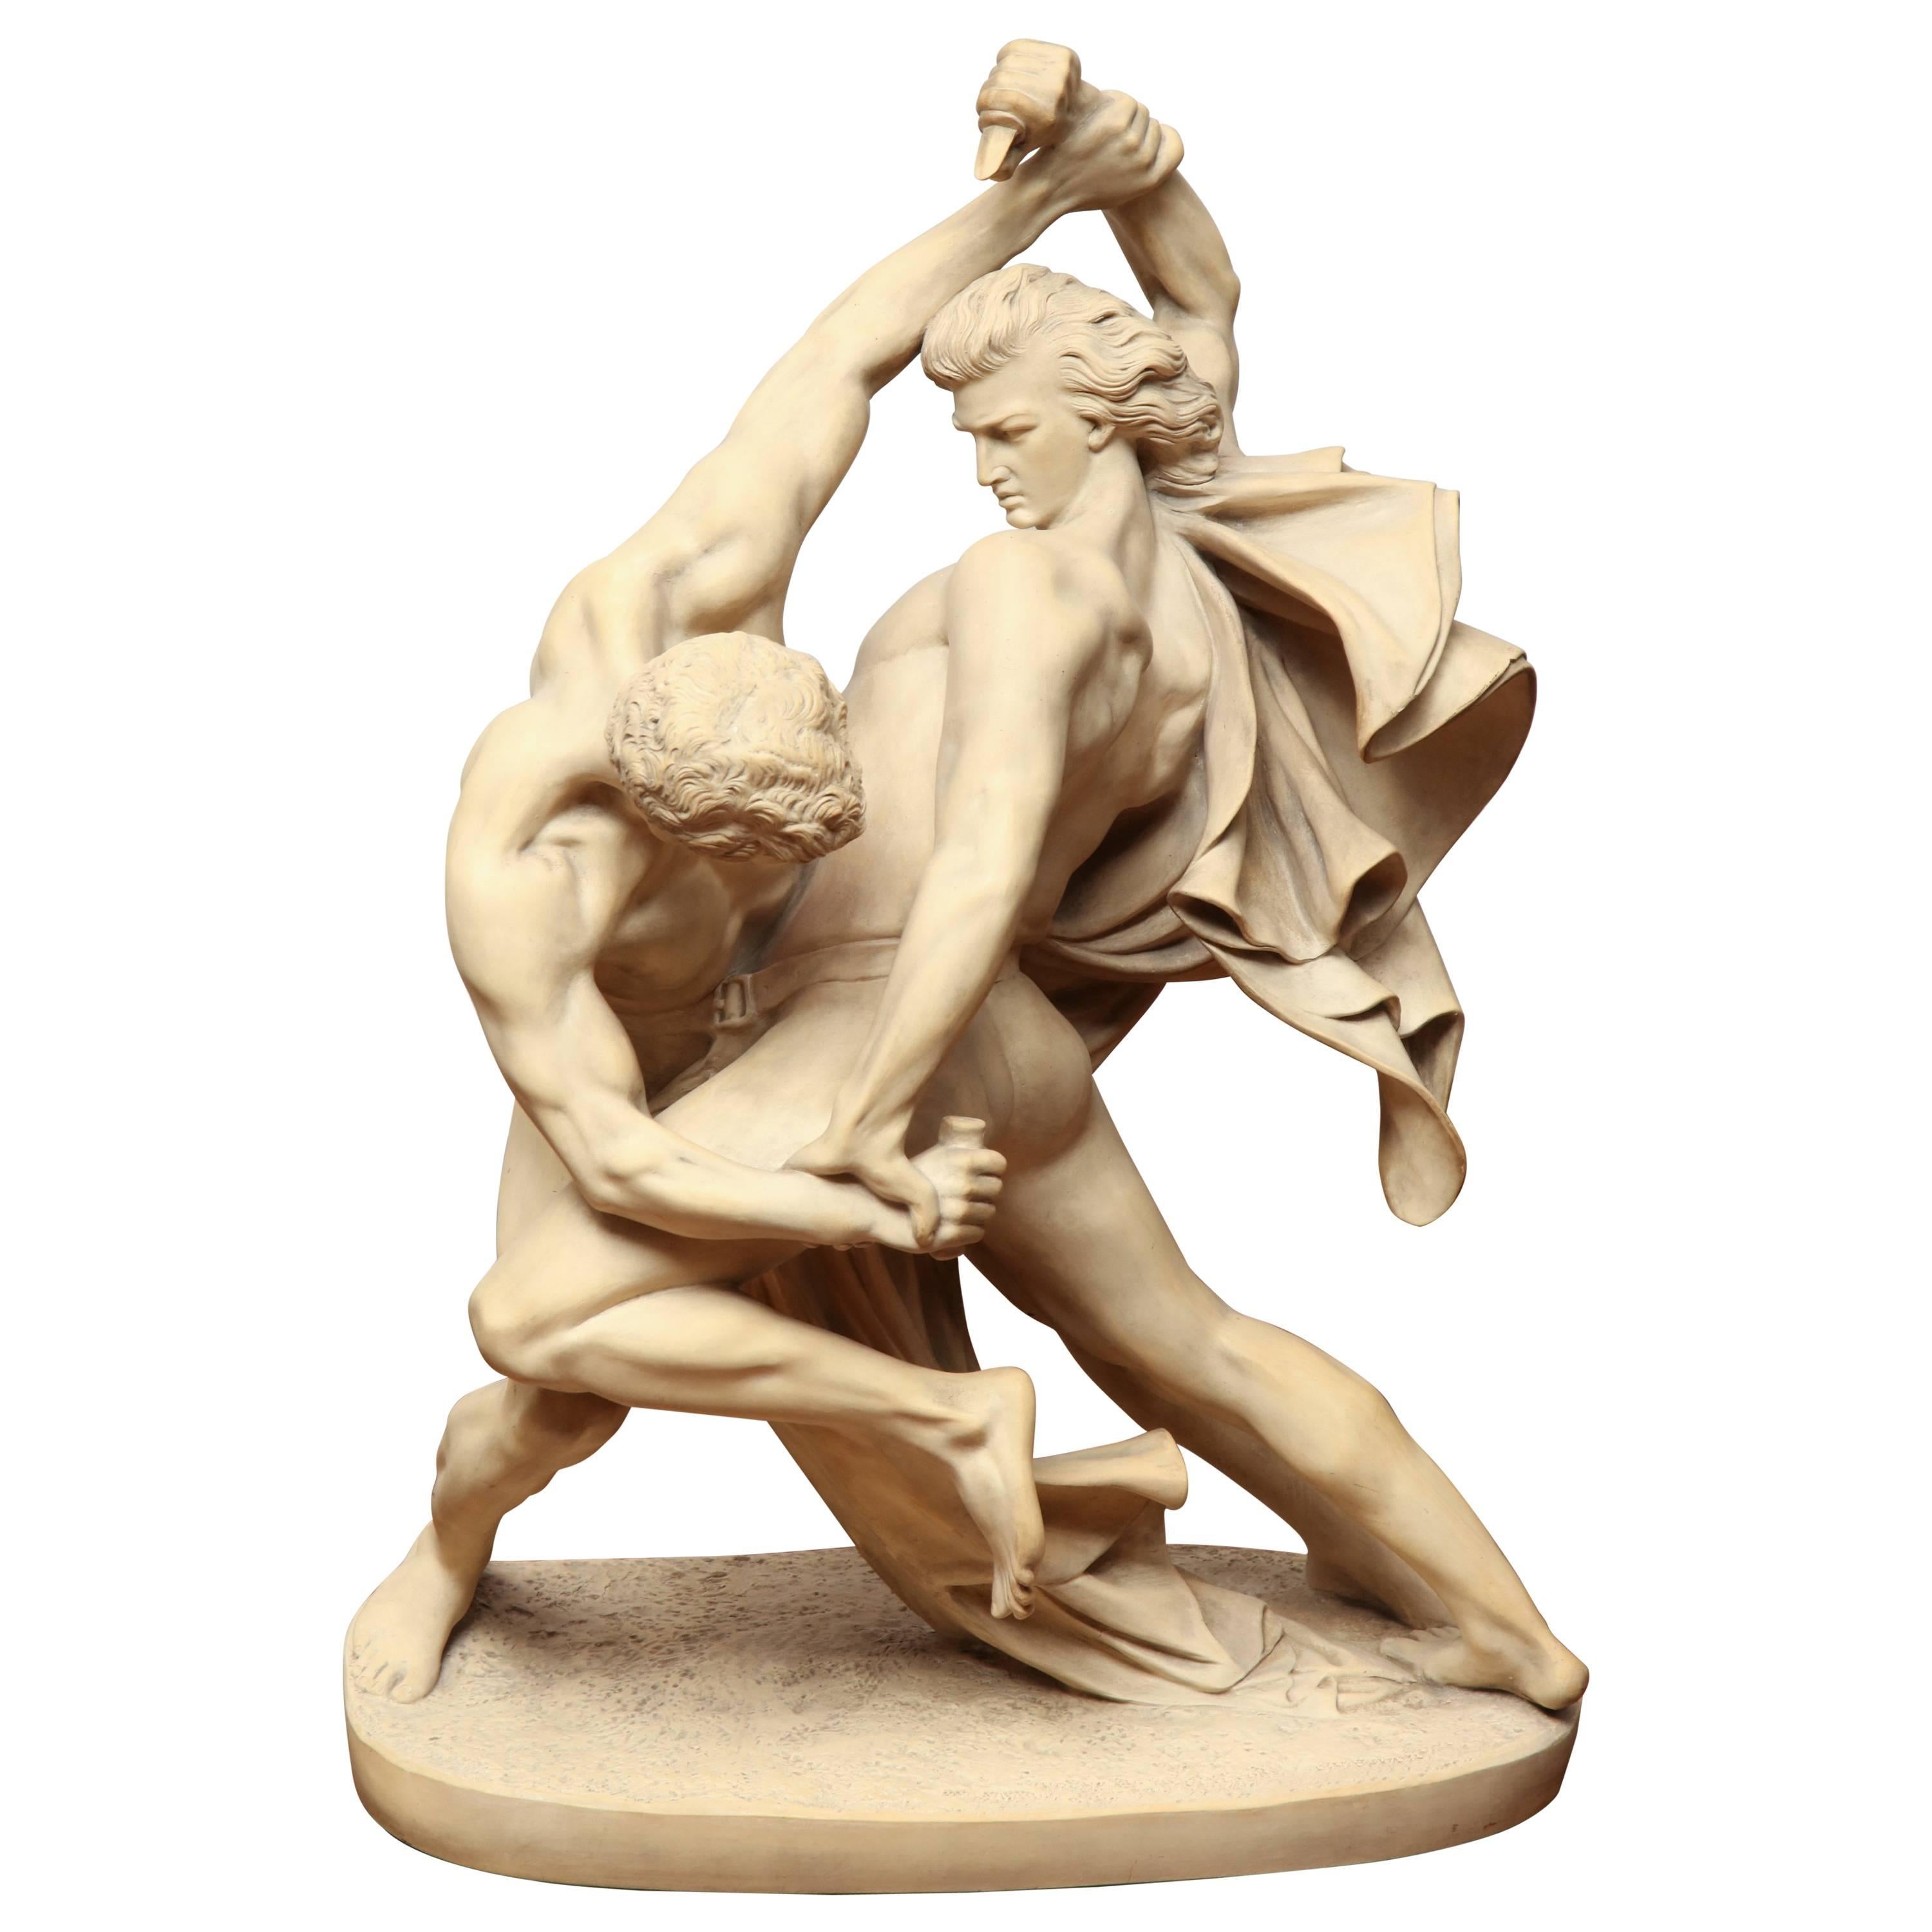 19th Century Terra Cotta Male Figures by Hjorth "The Baeltespaenderne Sculpture"